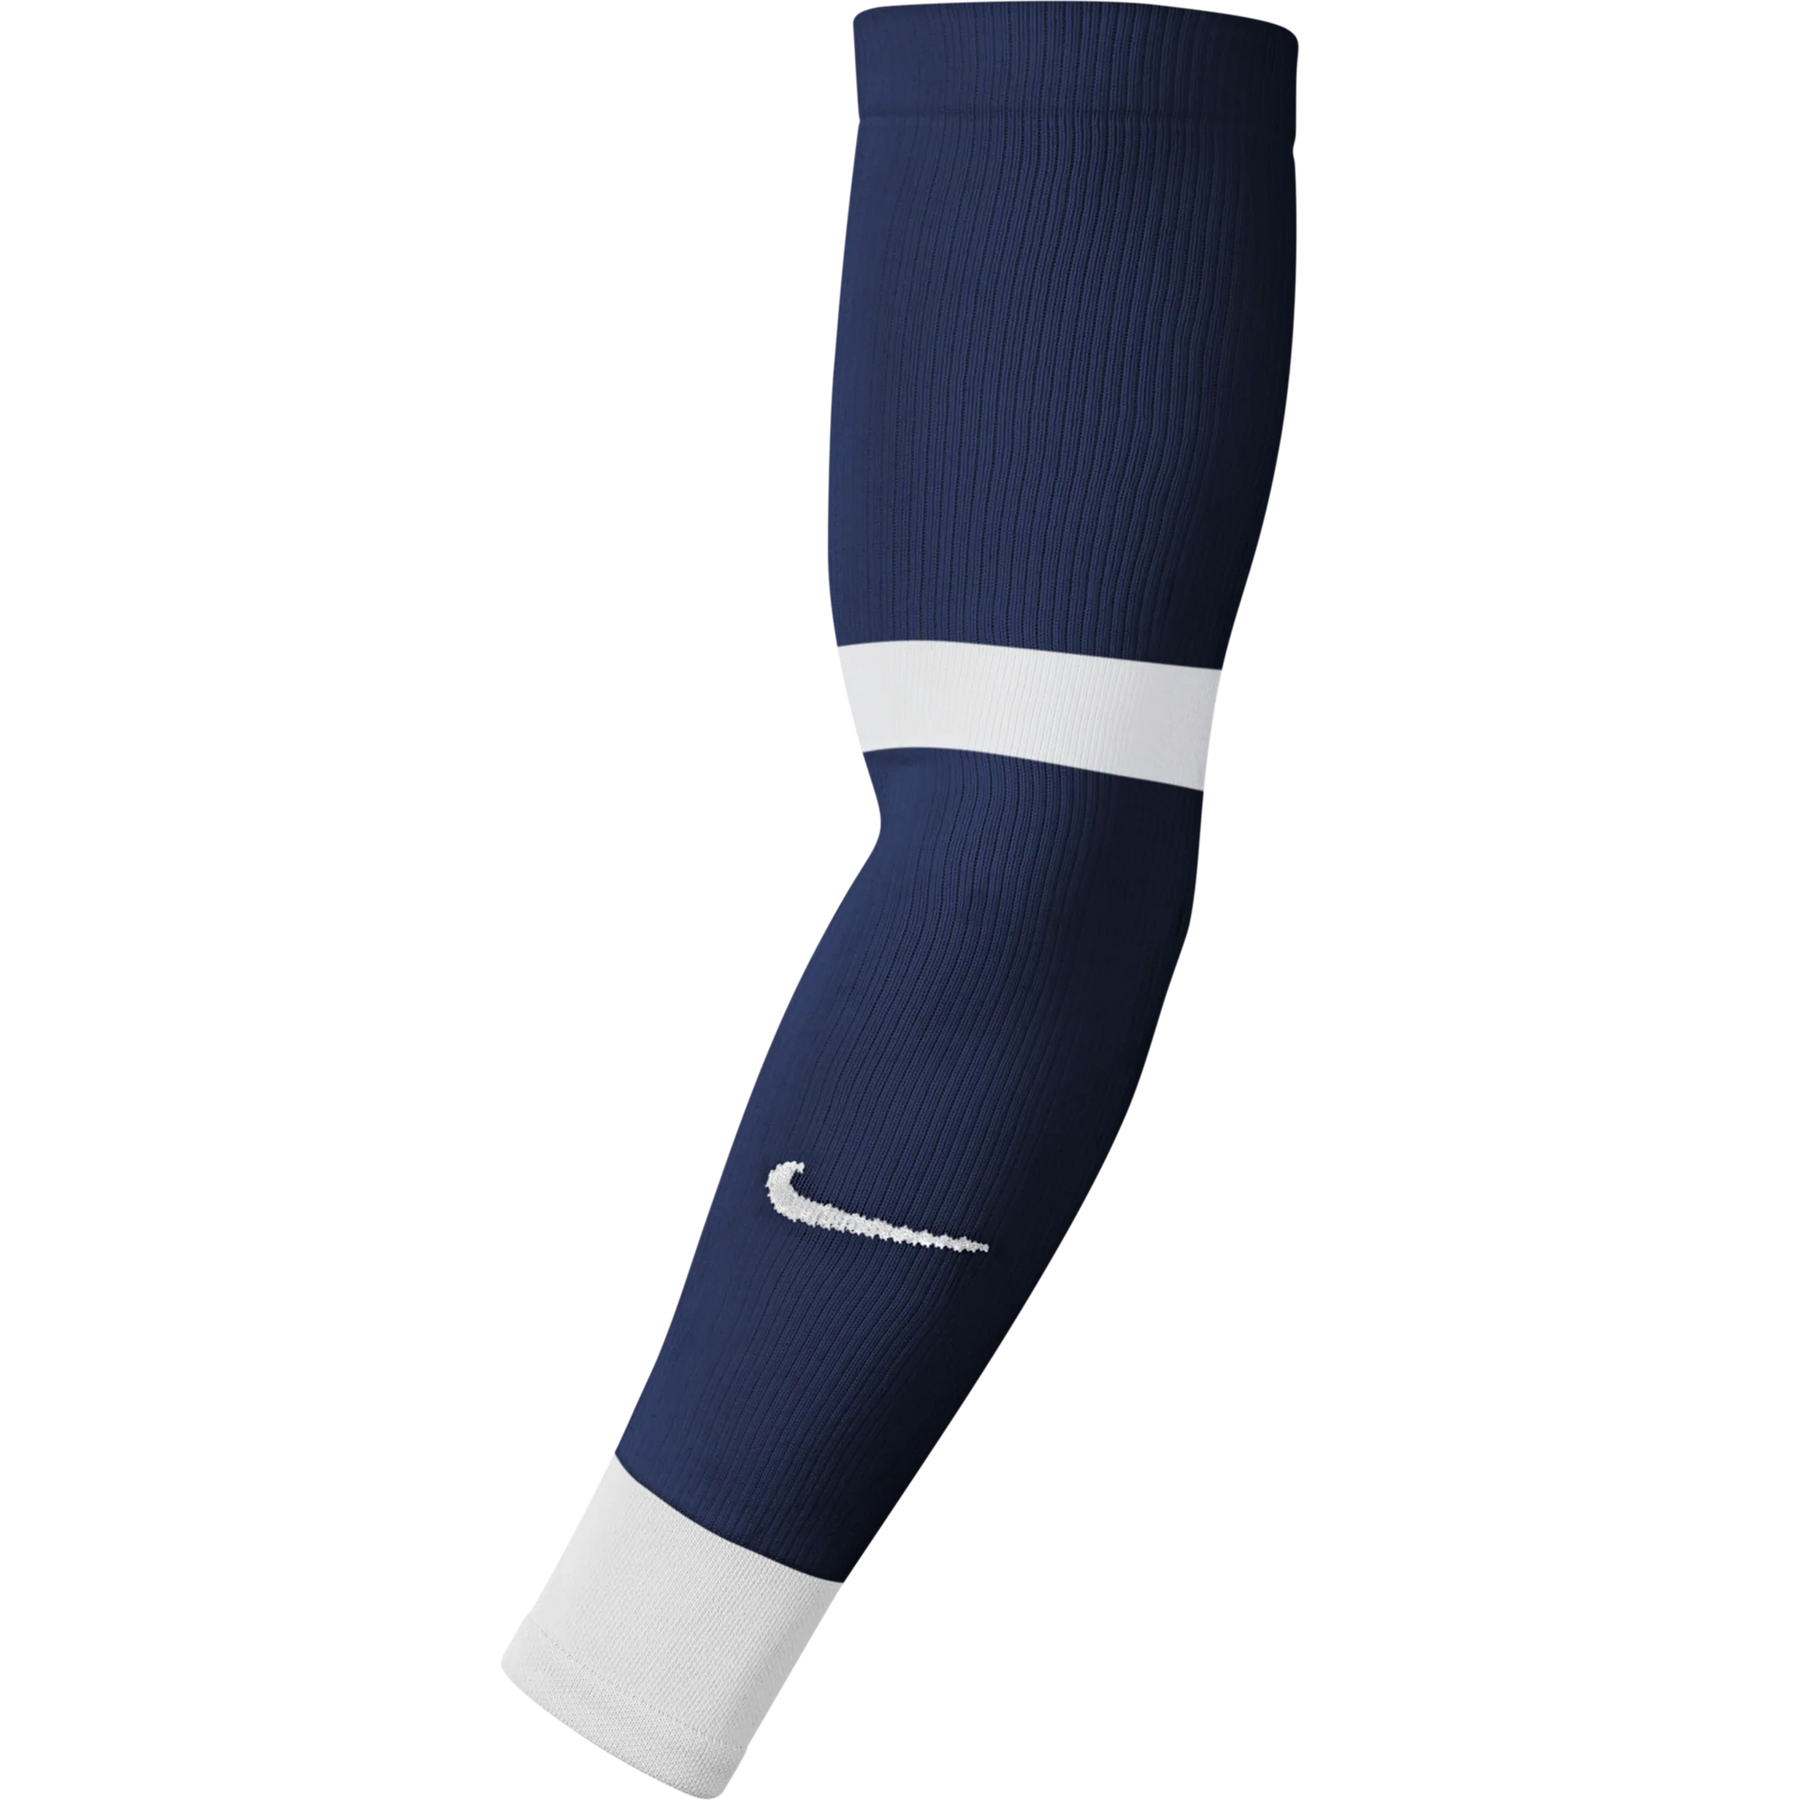 Nike Matchfit Sleeve 2021